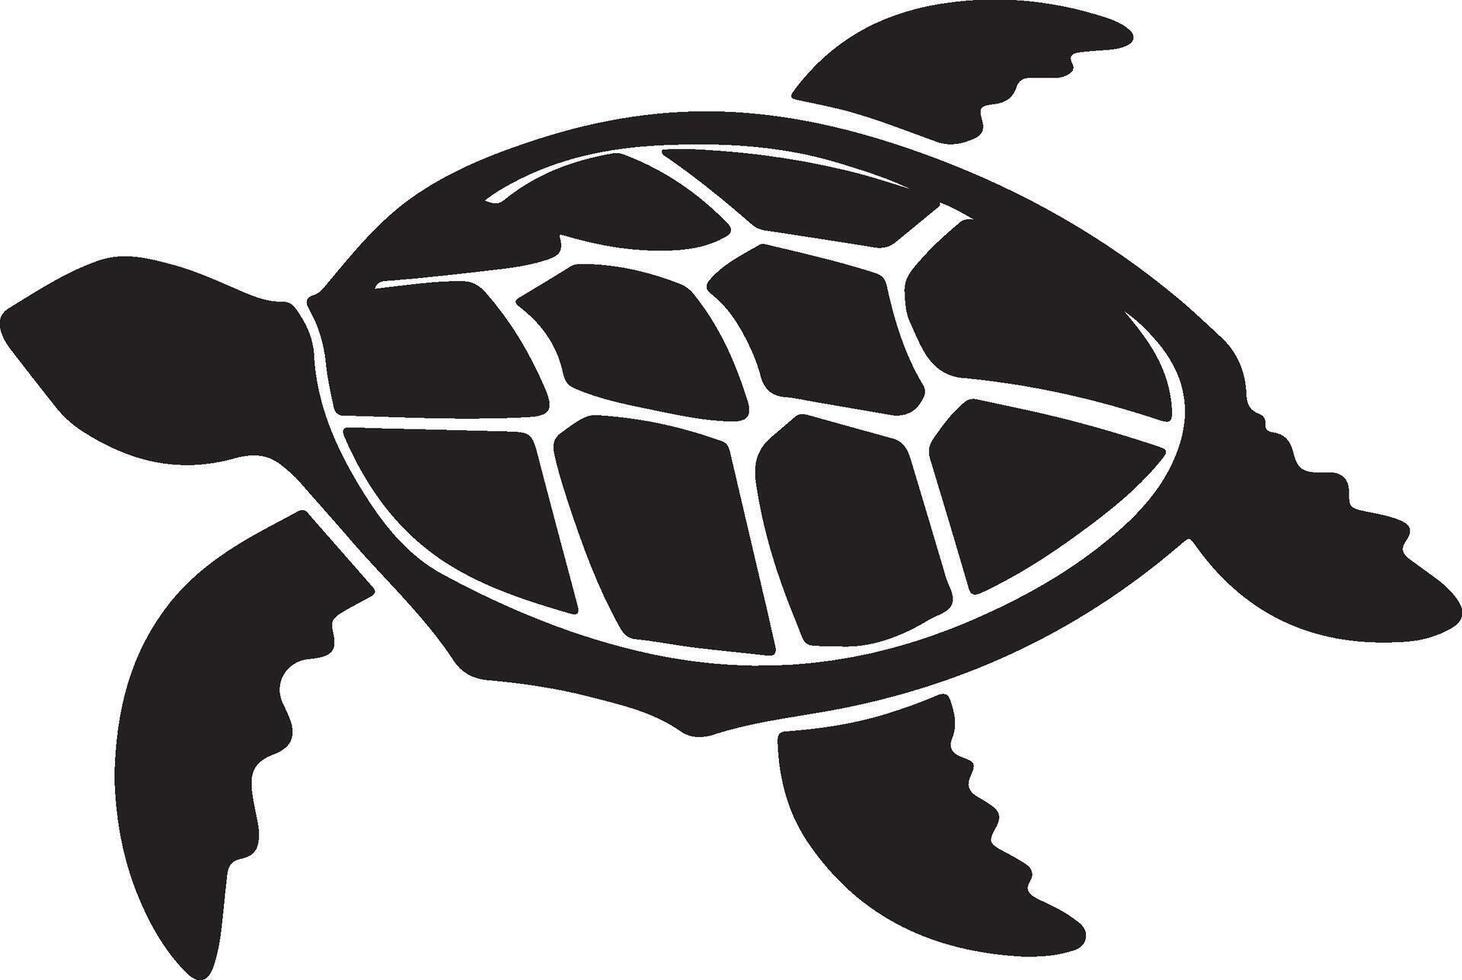 Turtle Silhouette Vector Illustration White Background